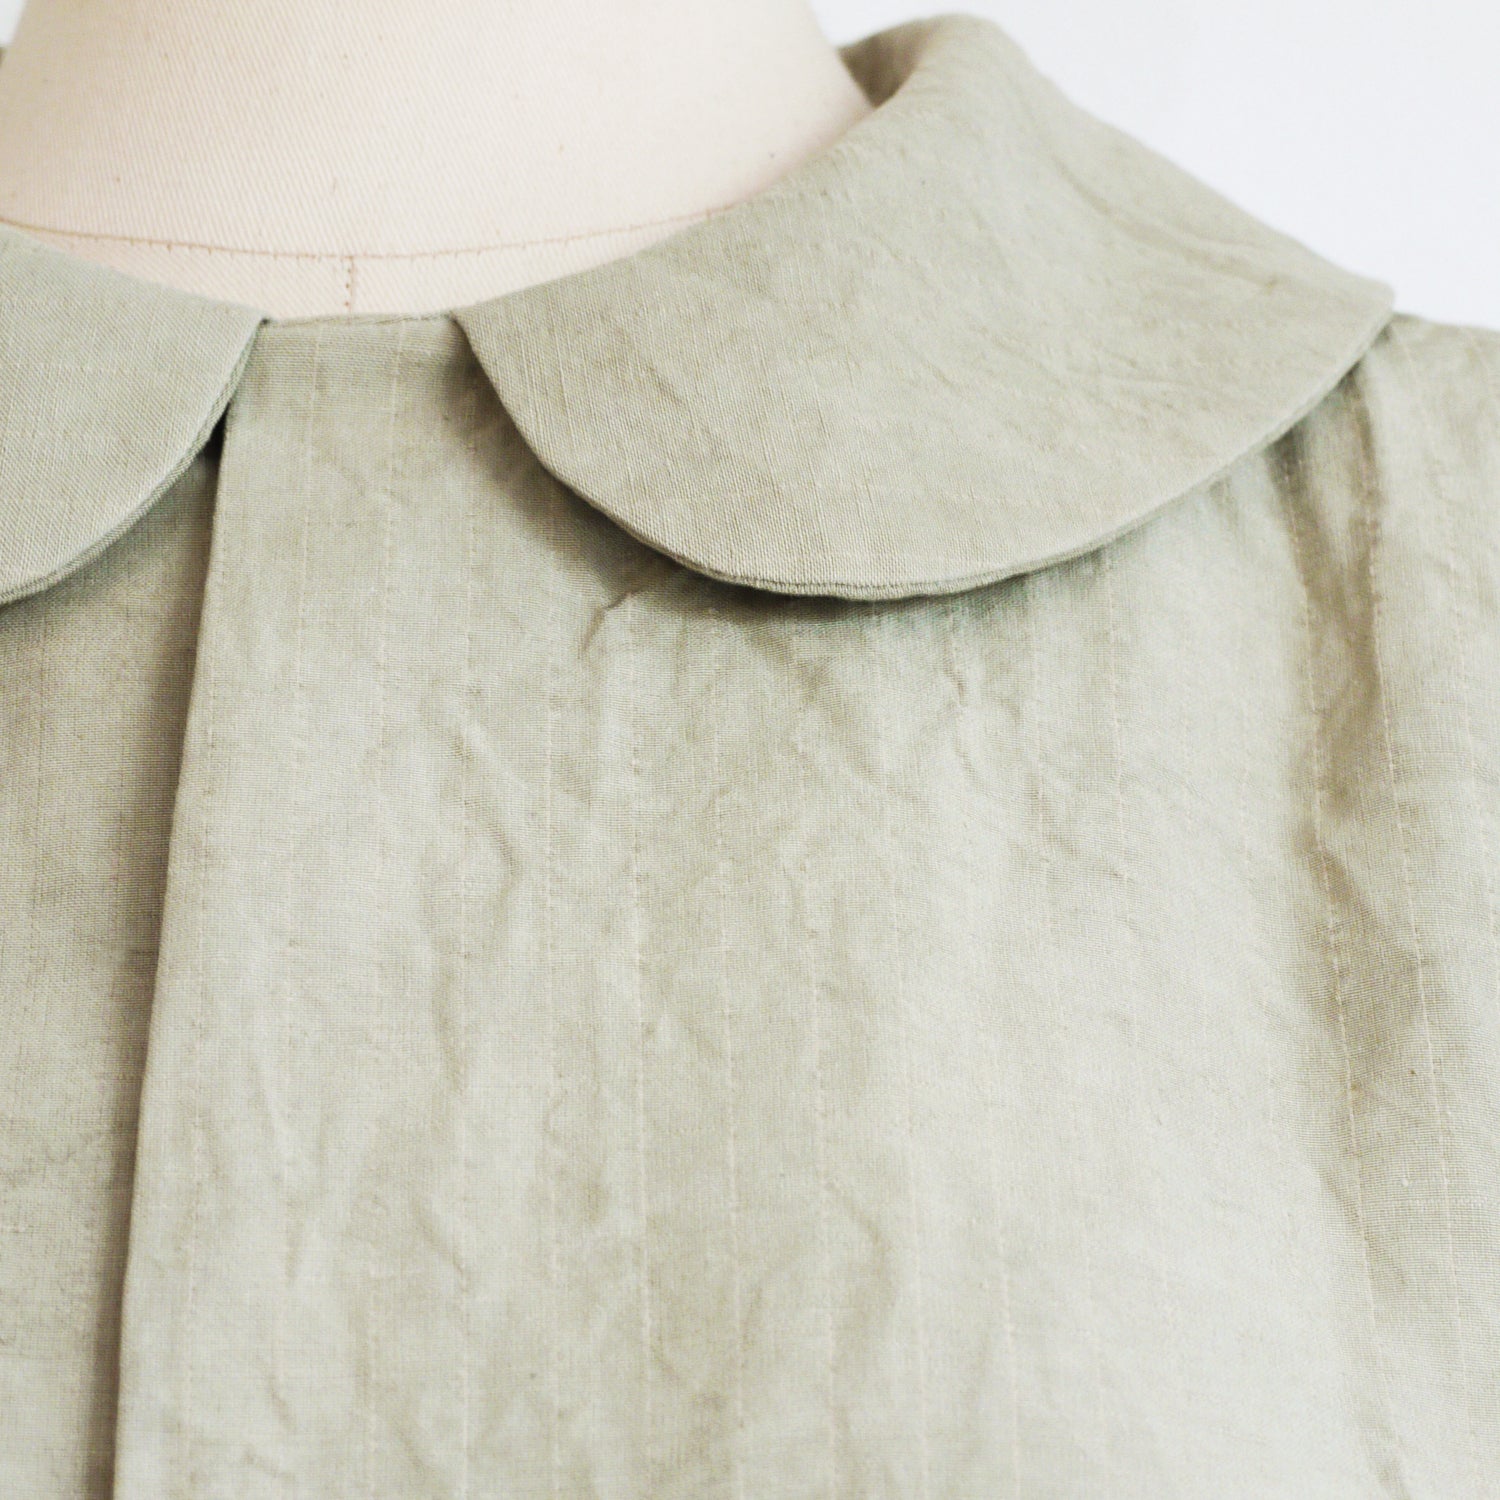 Celadon. Mugwort plant dye silk blouse in gray sage color.  Peter Pan collar cropped blouse